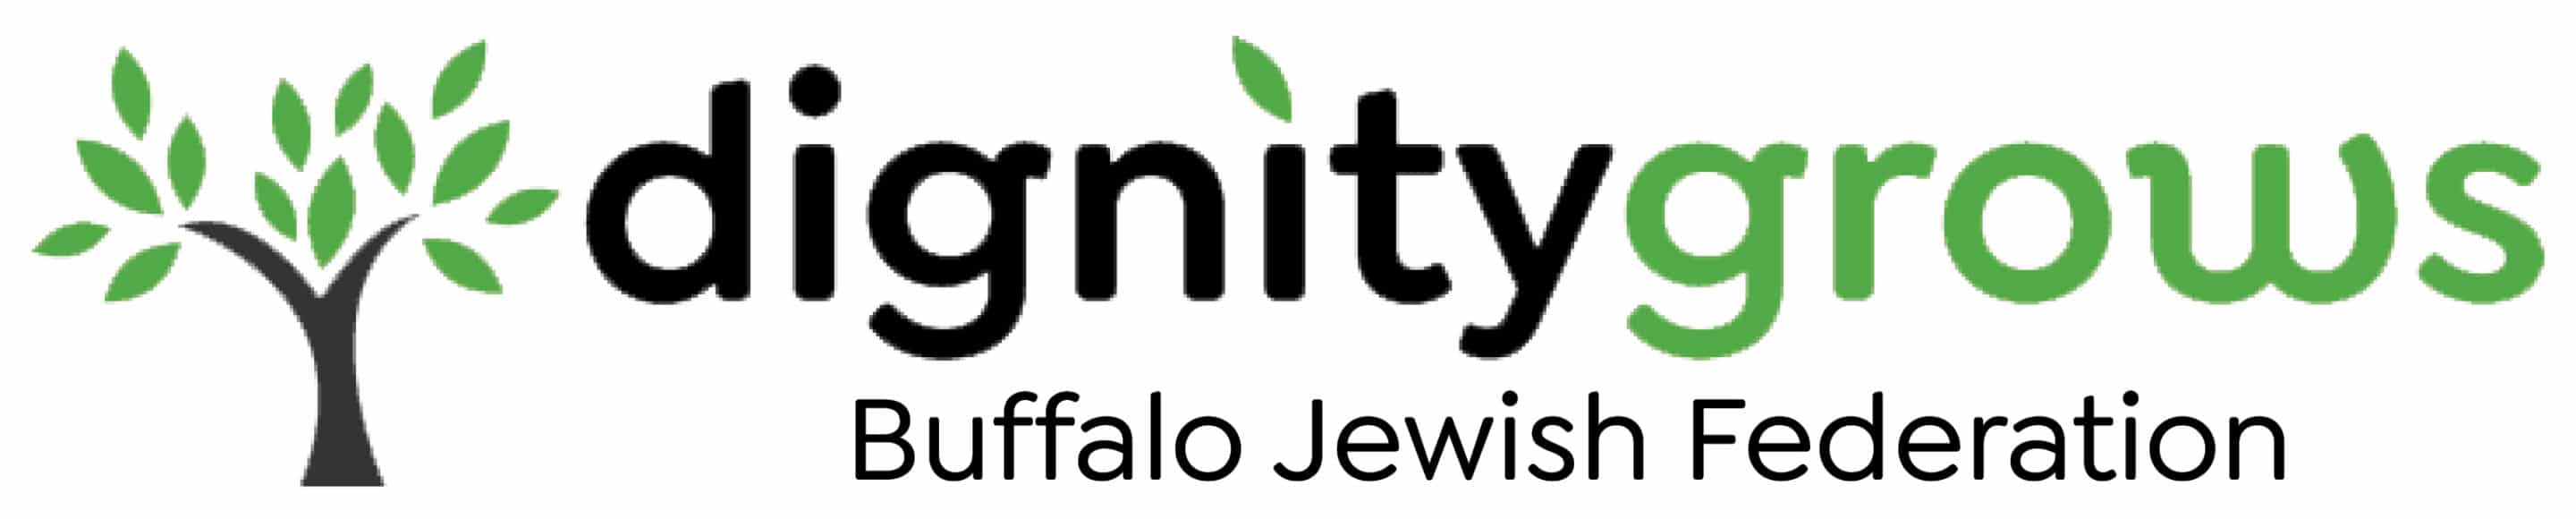 Women's Philanthropy - Dignity Grows Buffalo Logo 2 June 2021 c scaled